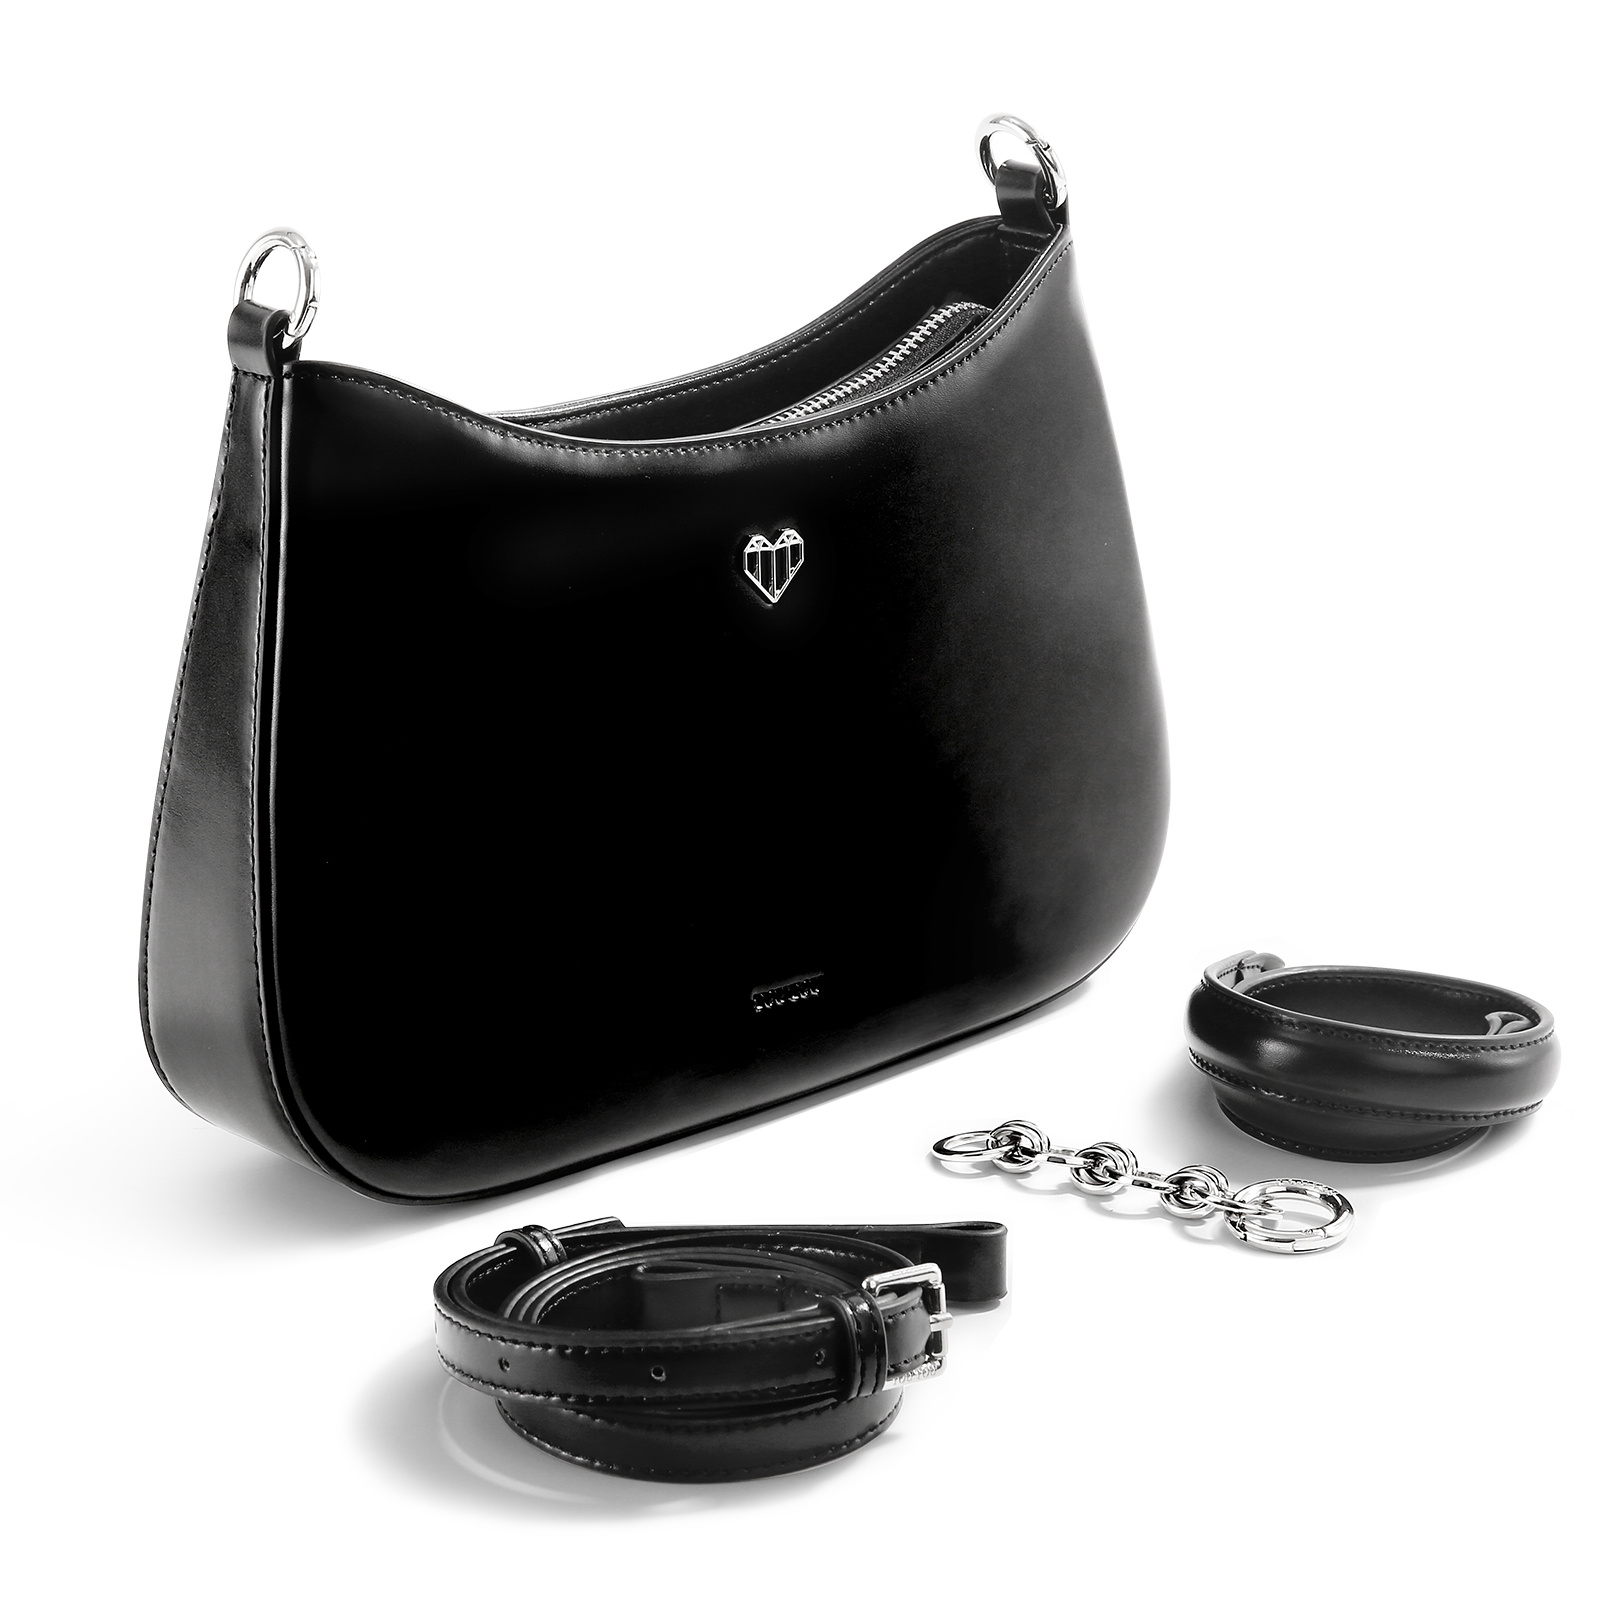 luxury handbags female crossbody bags Vintage Genuine leather one